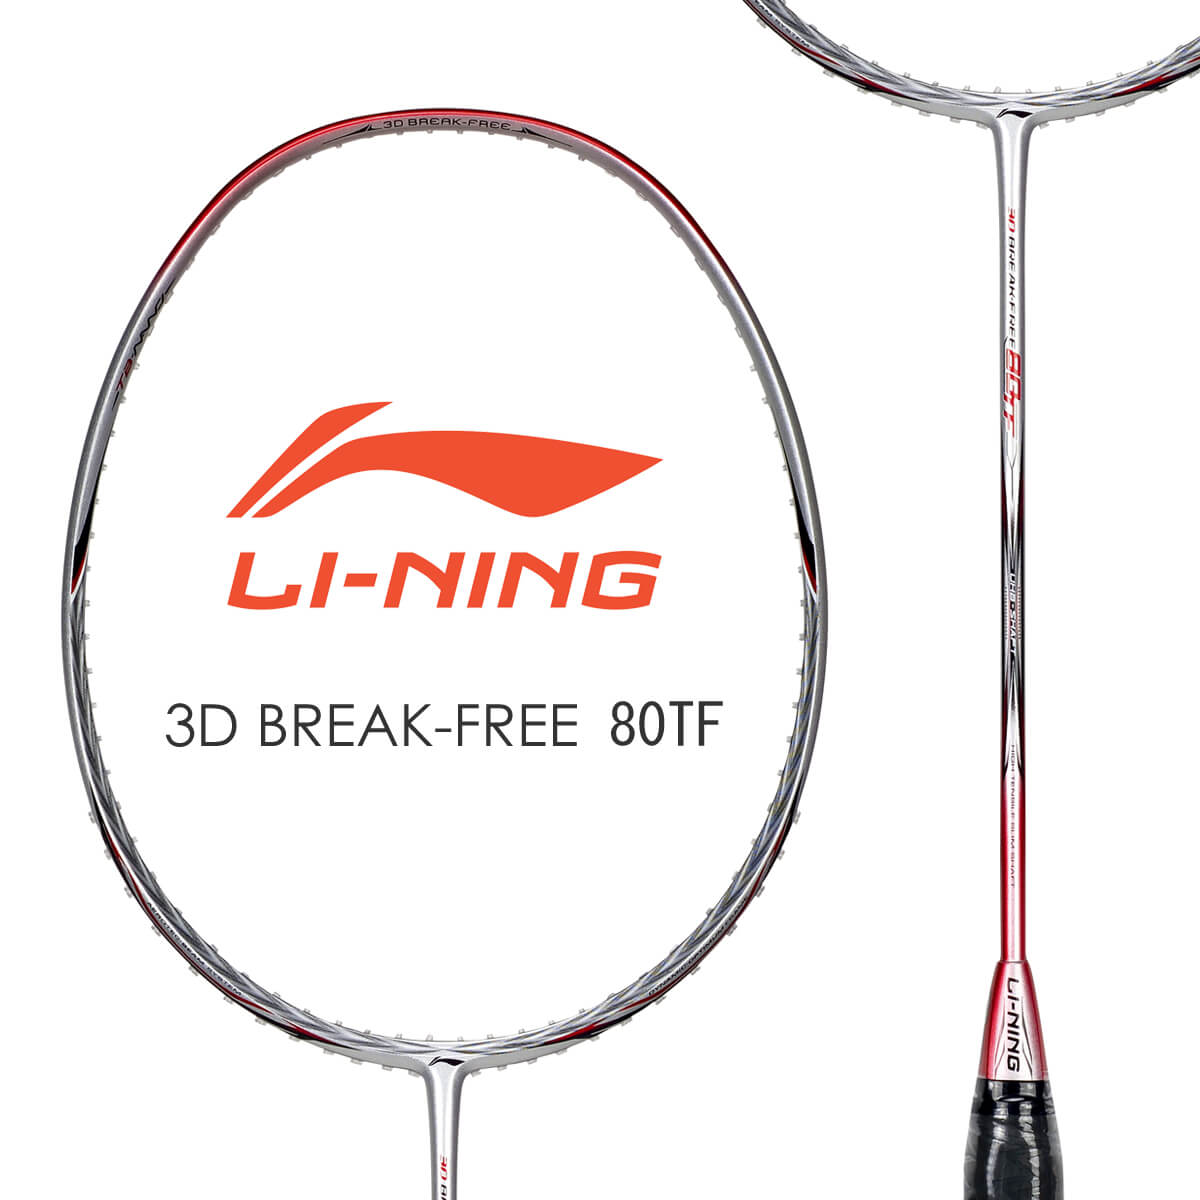 LI-NING 3D BREAK-FREE 80TF AYPJ008 バドミントンラケット リーニン【オススメガット&ガット張り工賃無料】